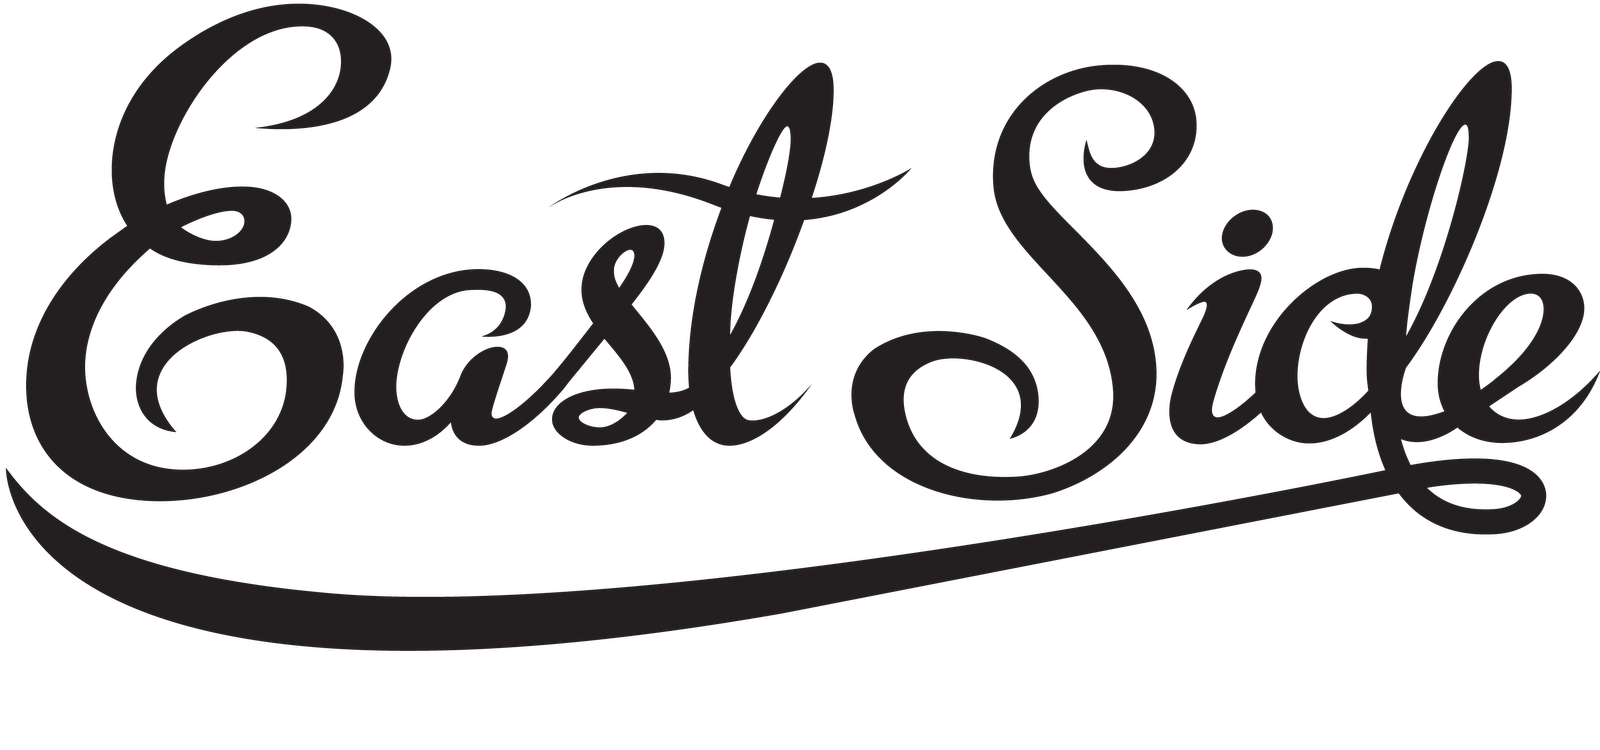 East Side надпись. Логотип East Coast. Eastside лого. Красивая надпись Восток. E side